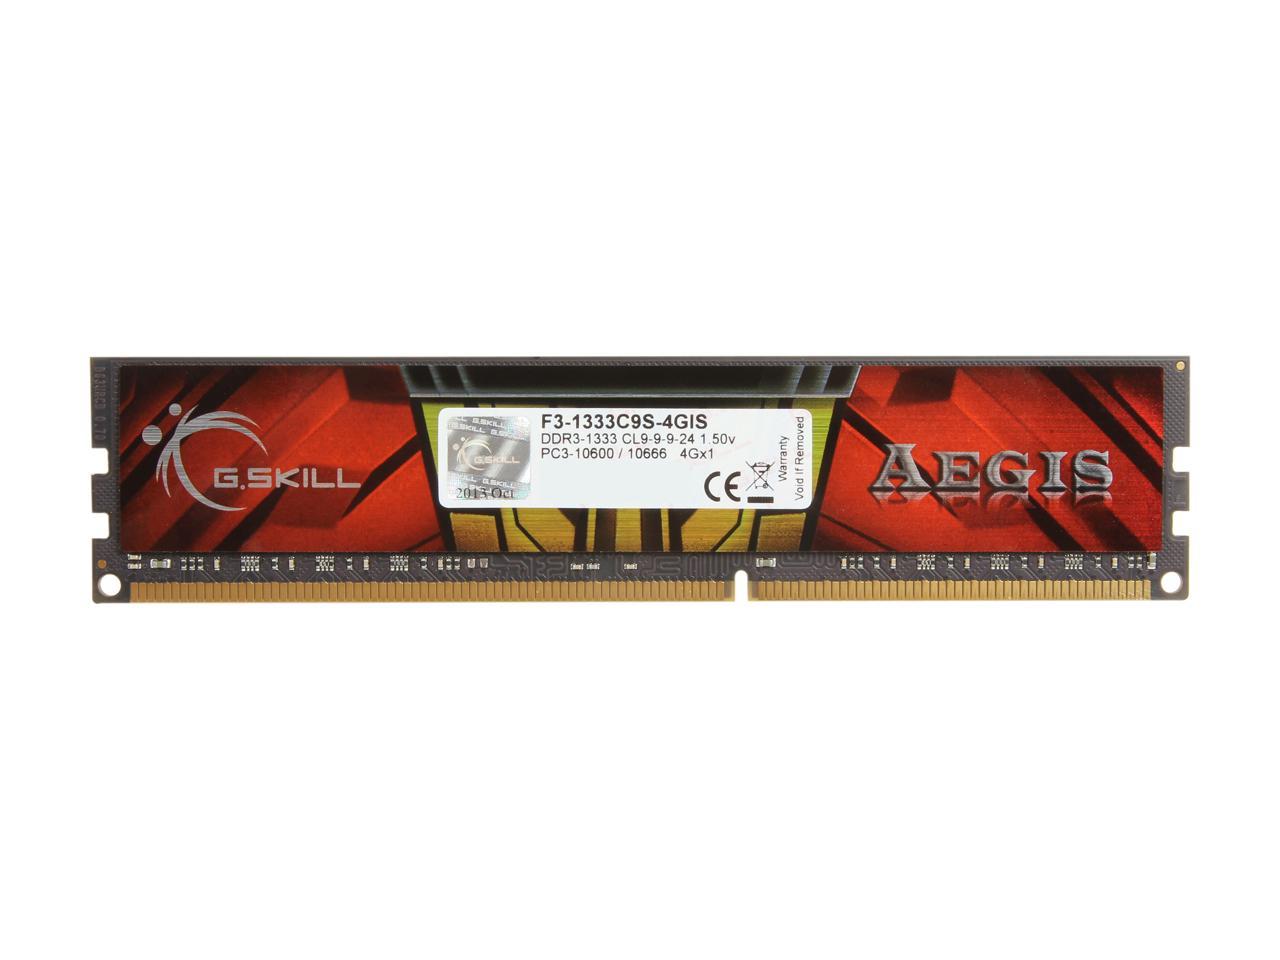 G.SKILL AEGIS 4GB 240-Pin DDR3 SDRAM DDR3 1333 (PC3 10600) Desktop Memory Model F3-1333C9S-4GIS